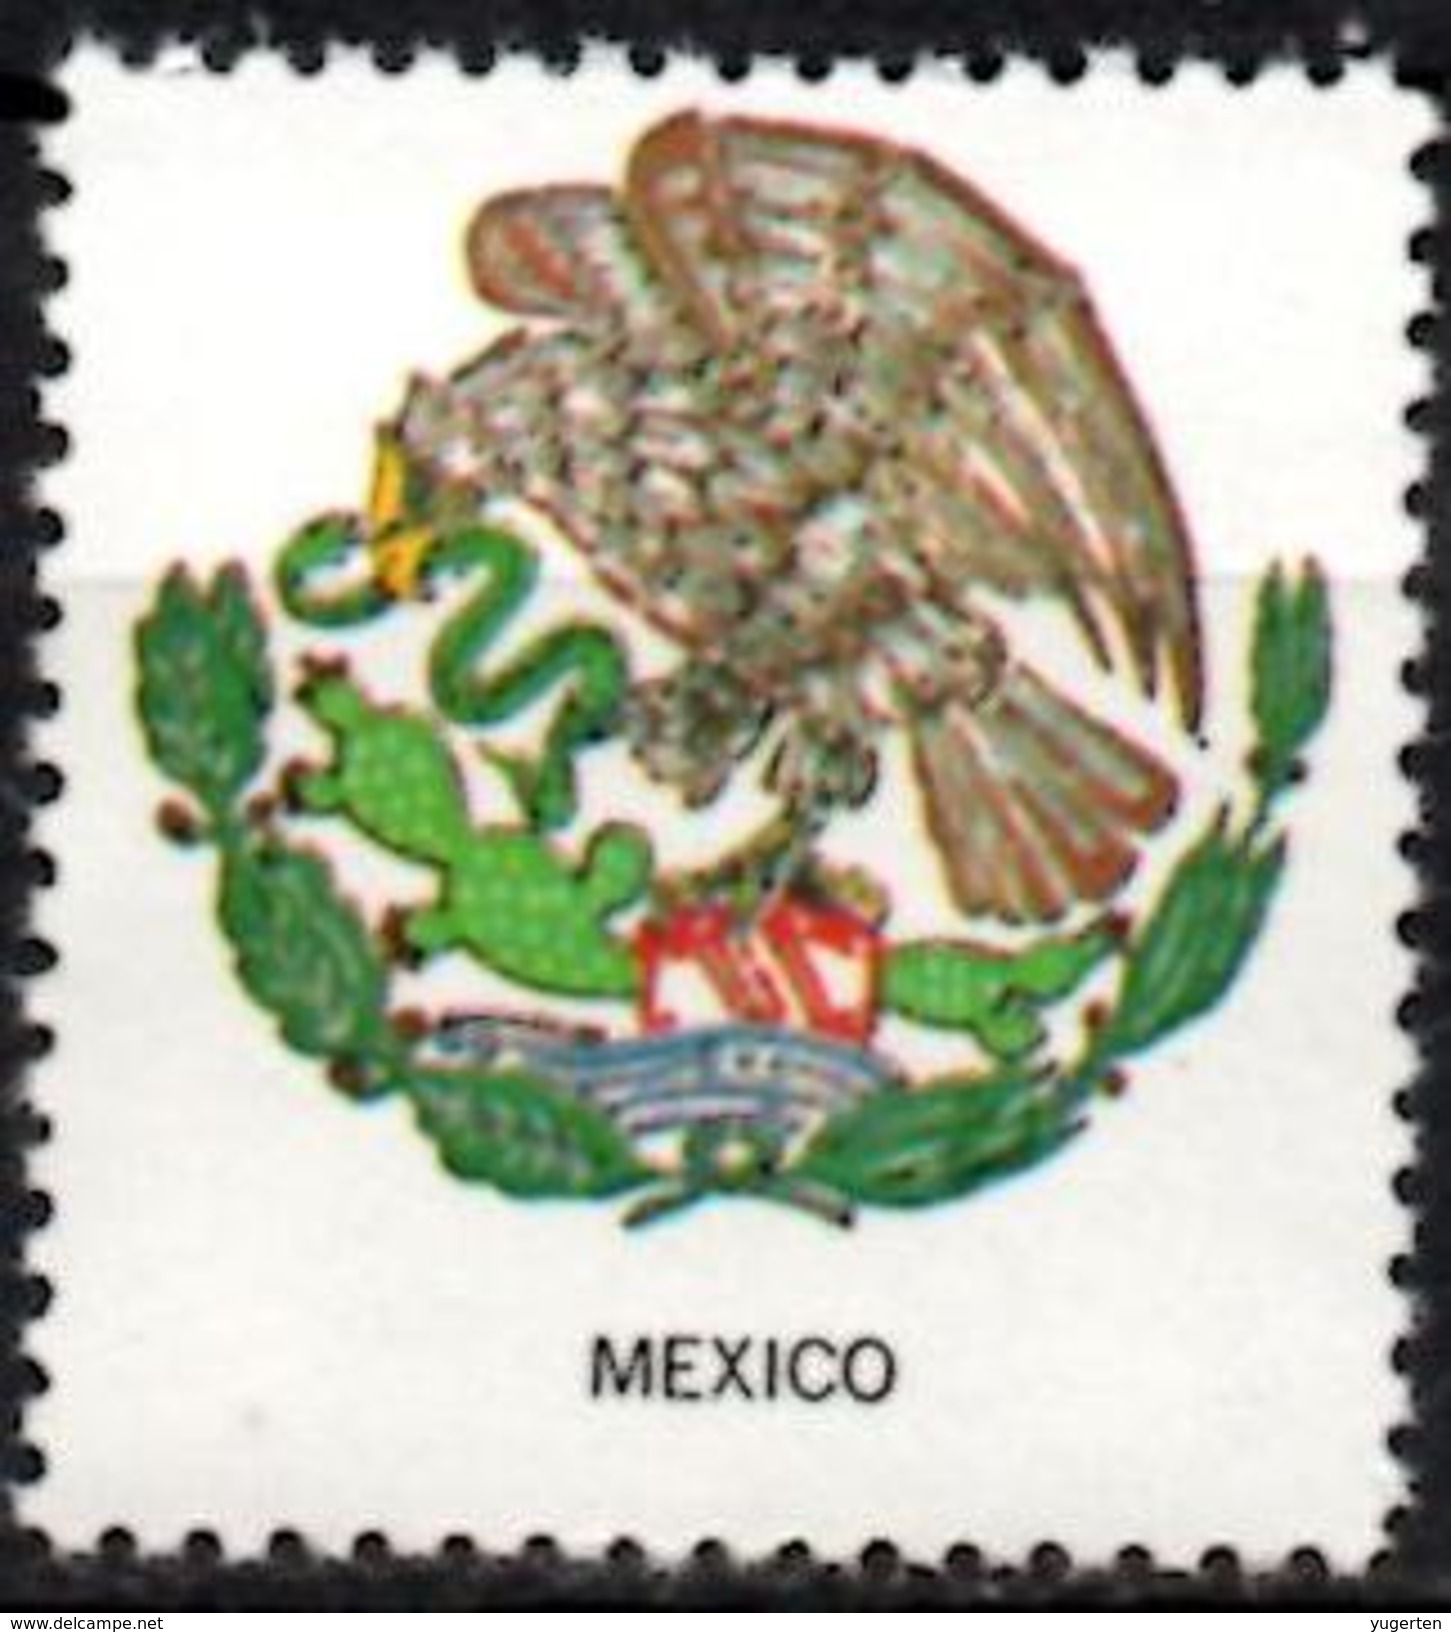 VIgnette Cinderella Seal Label Gummed - Mexico - Coats Of Arms - Cactus Kaktus Serpent Snacke Schlange Aigle Eagle Adler - Sukkulenten